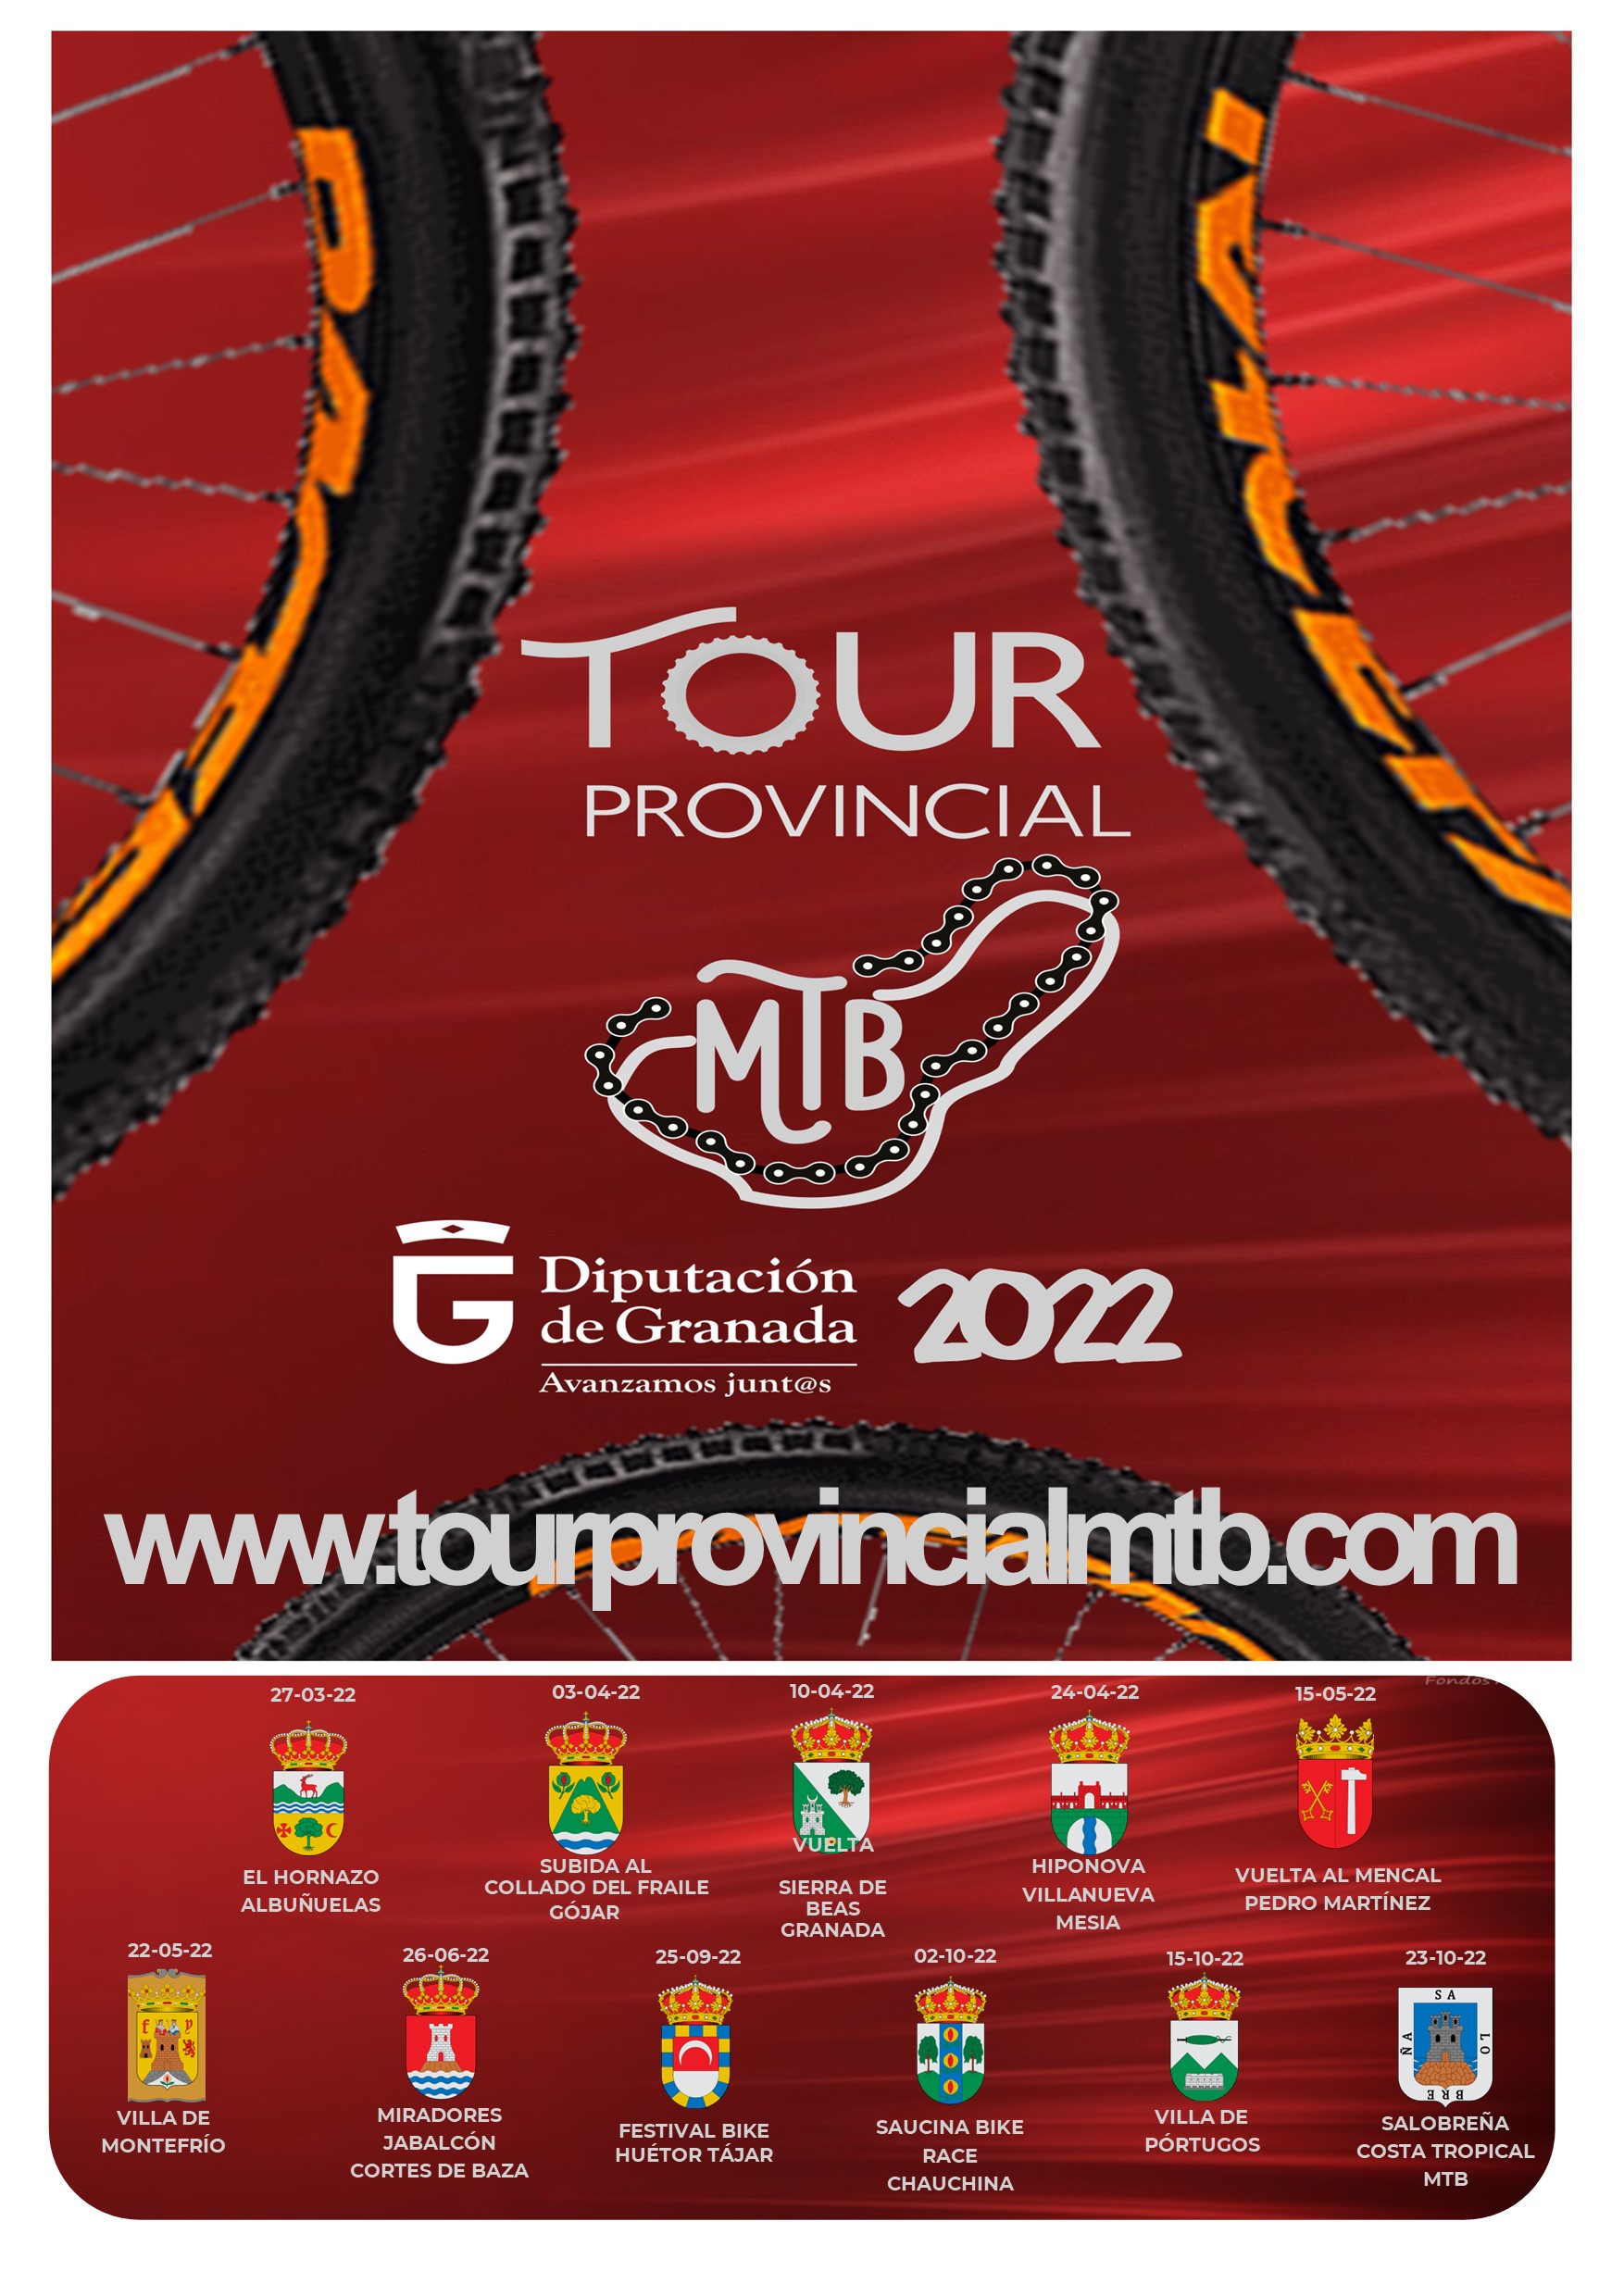 TOUR PROVINCIAL MTB 2022 - VUELTA SIERRA DE BEAS GRANADA